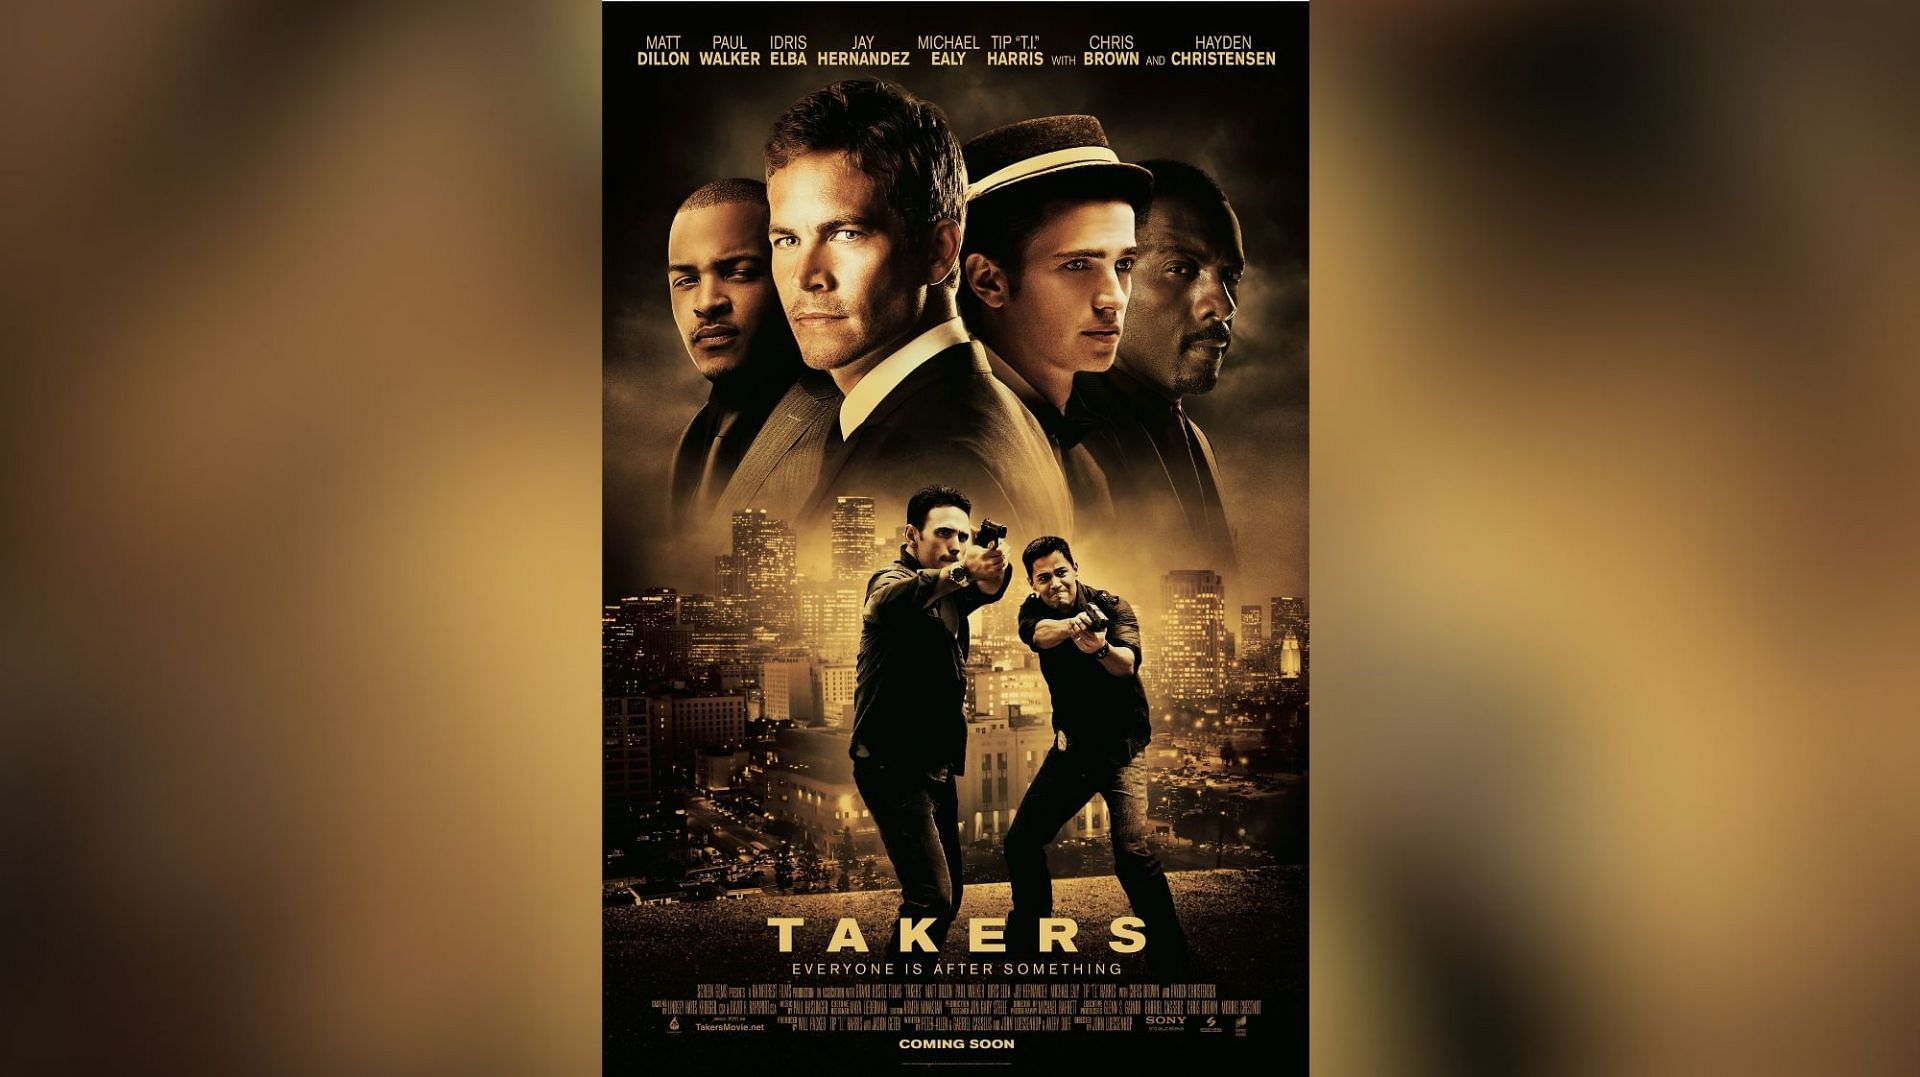 Takers (Image via Sony)